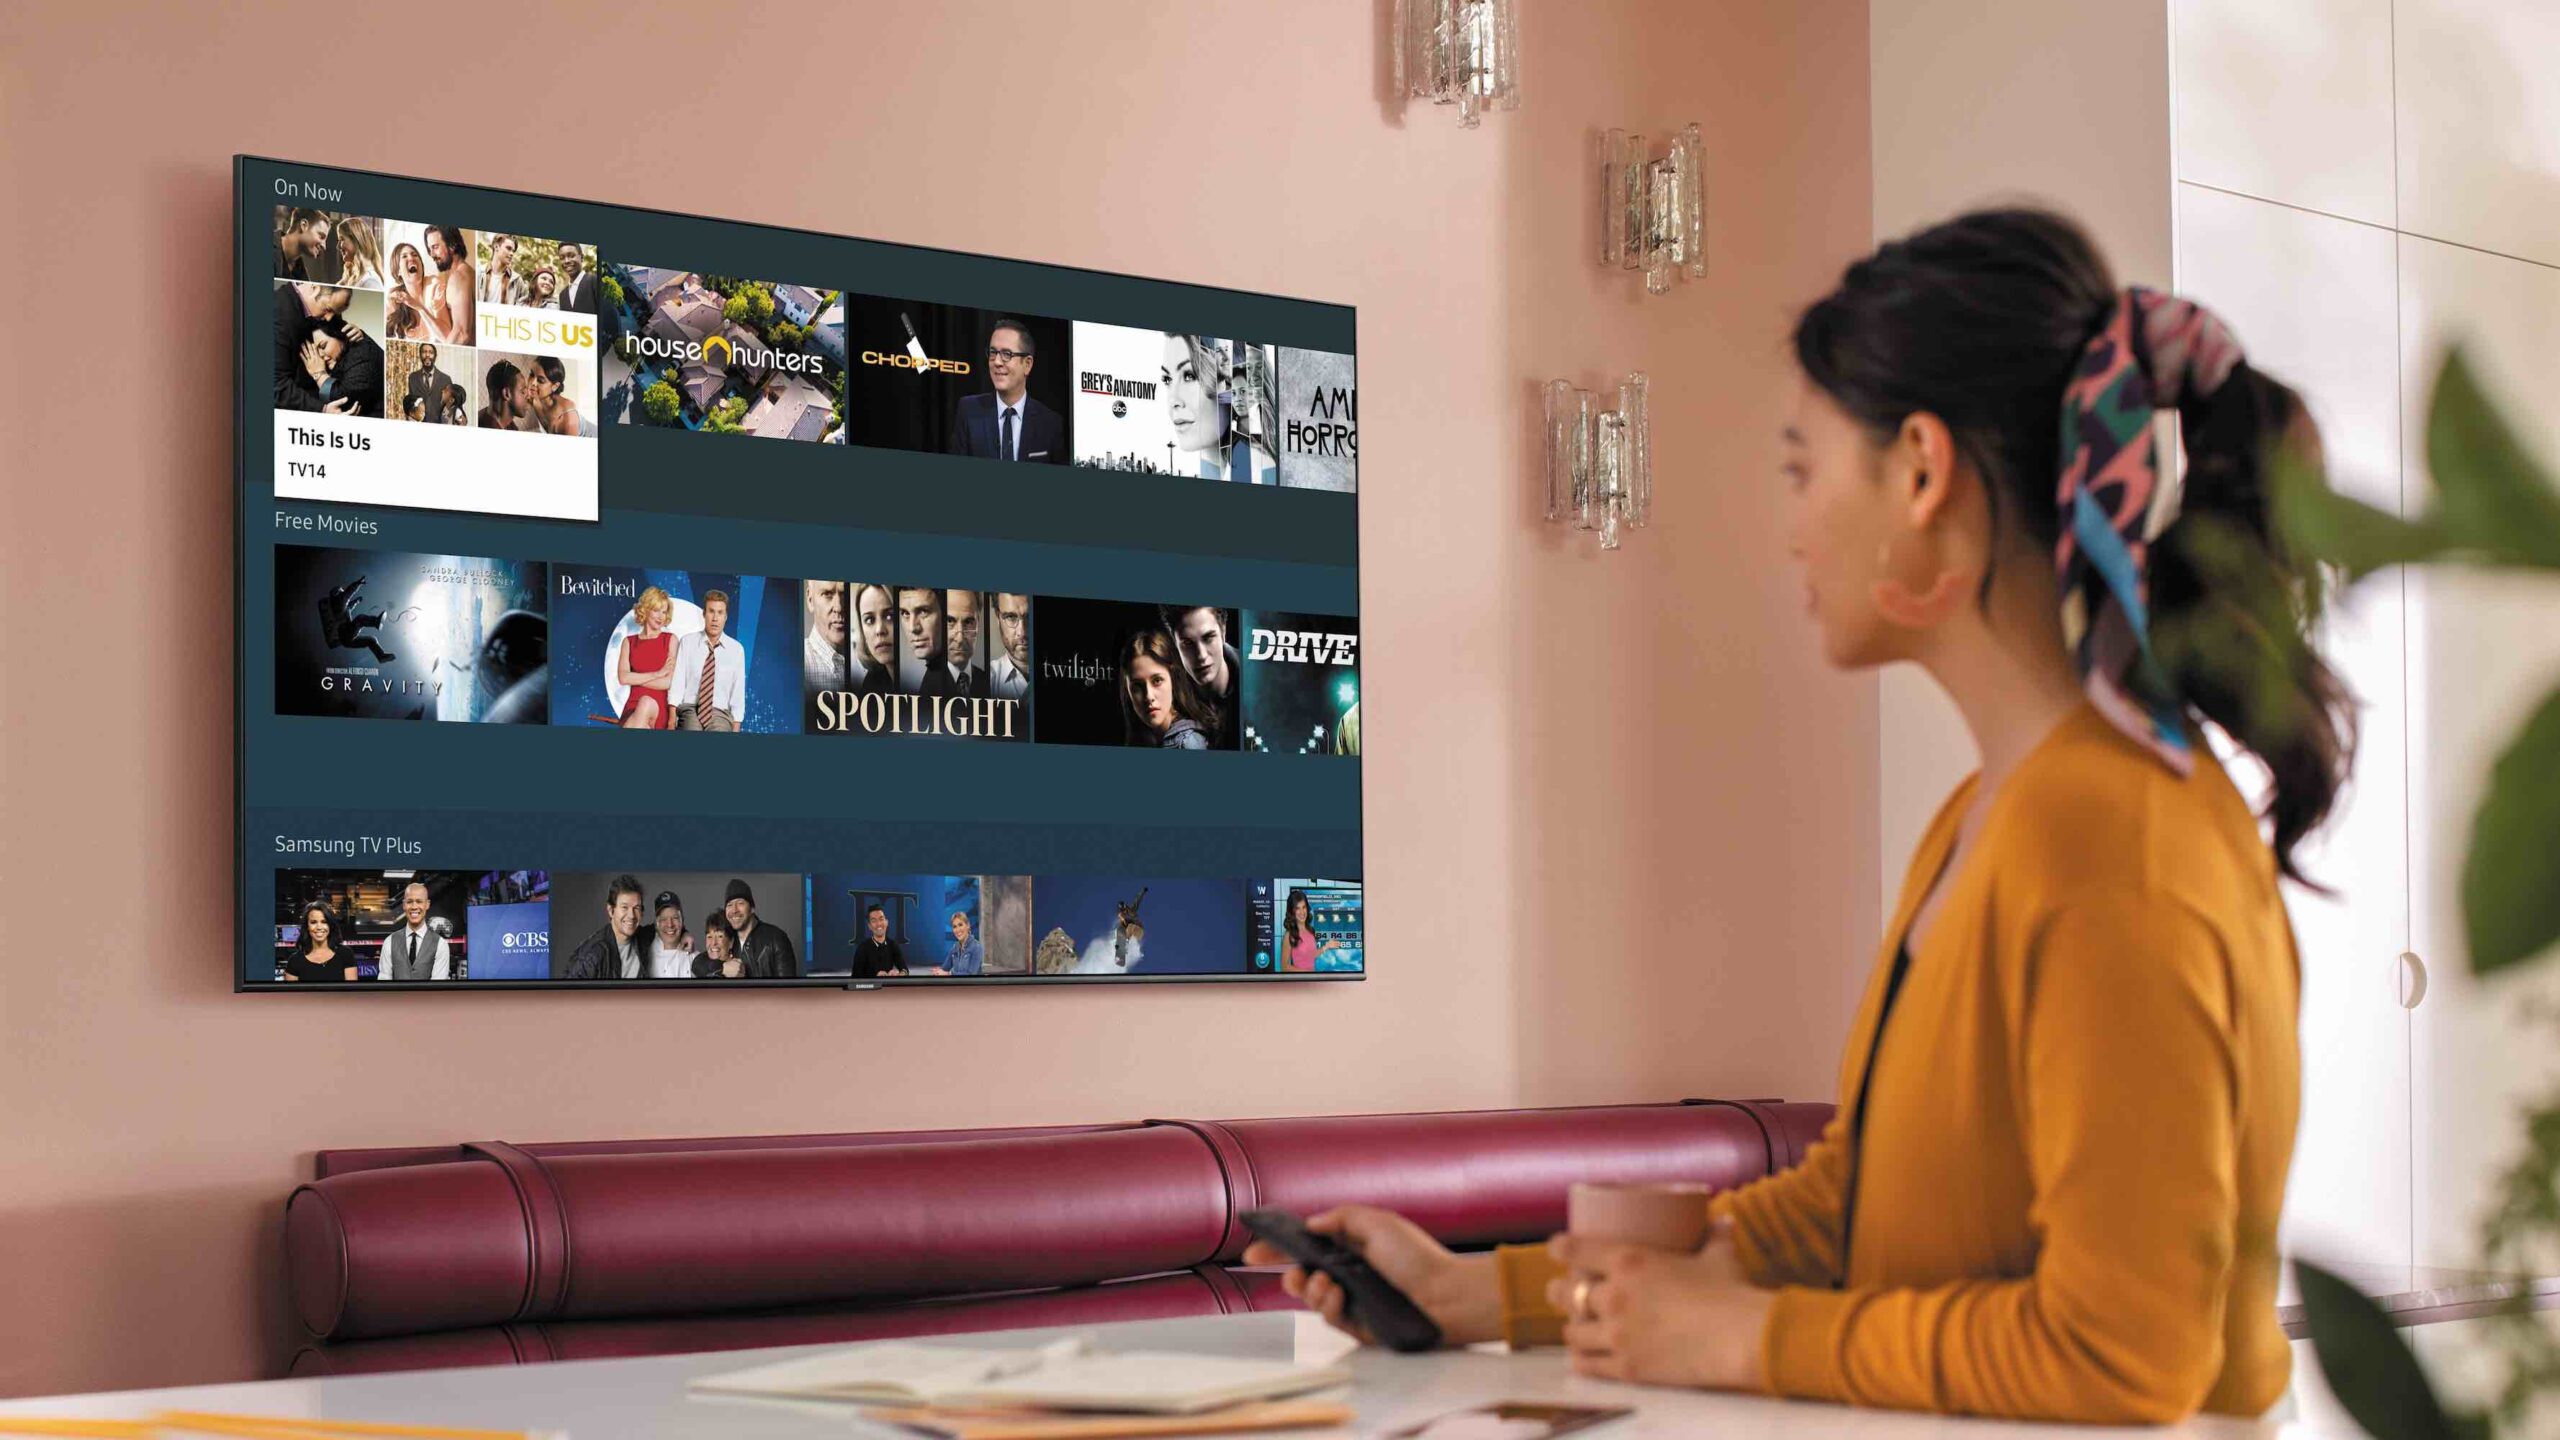 How to Configure Screen Saver on SHARP Aquos LED Smart Tv – Set Photo as  Smart TV Screen Saver - YouTube